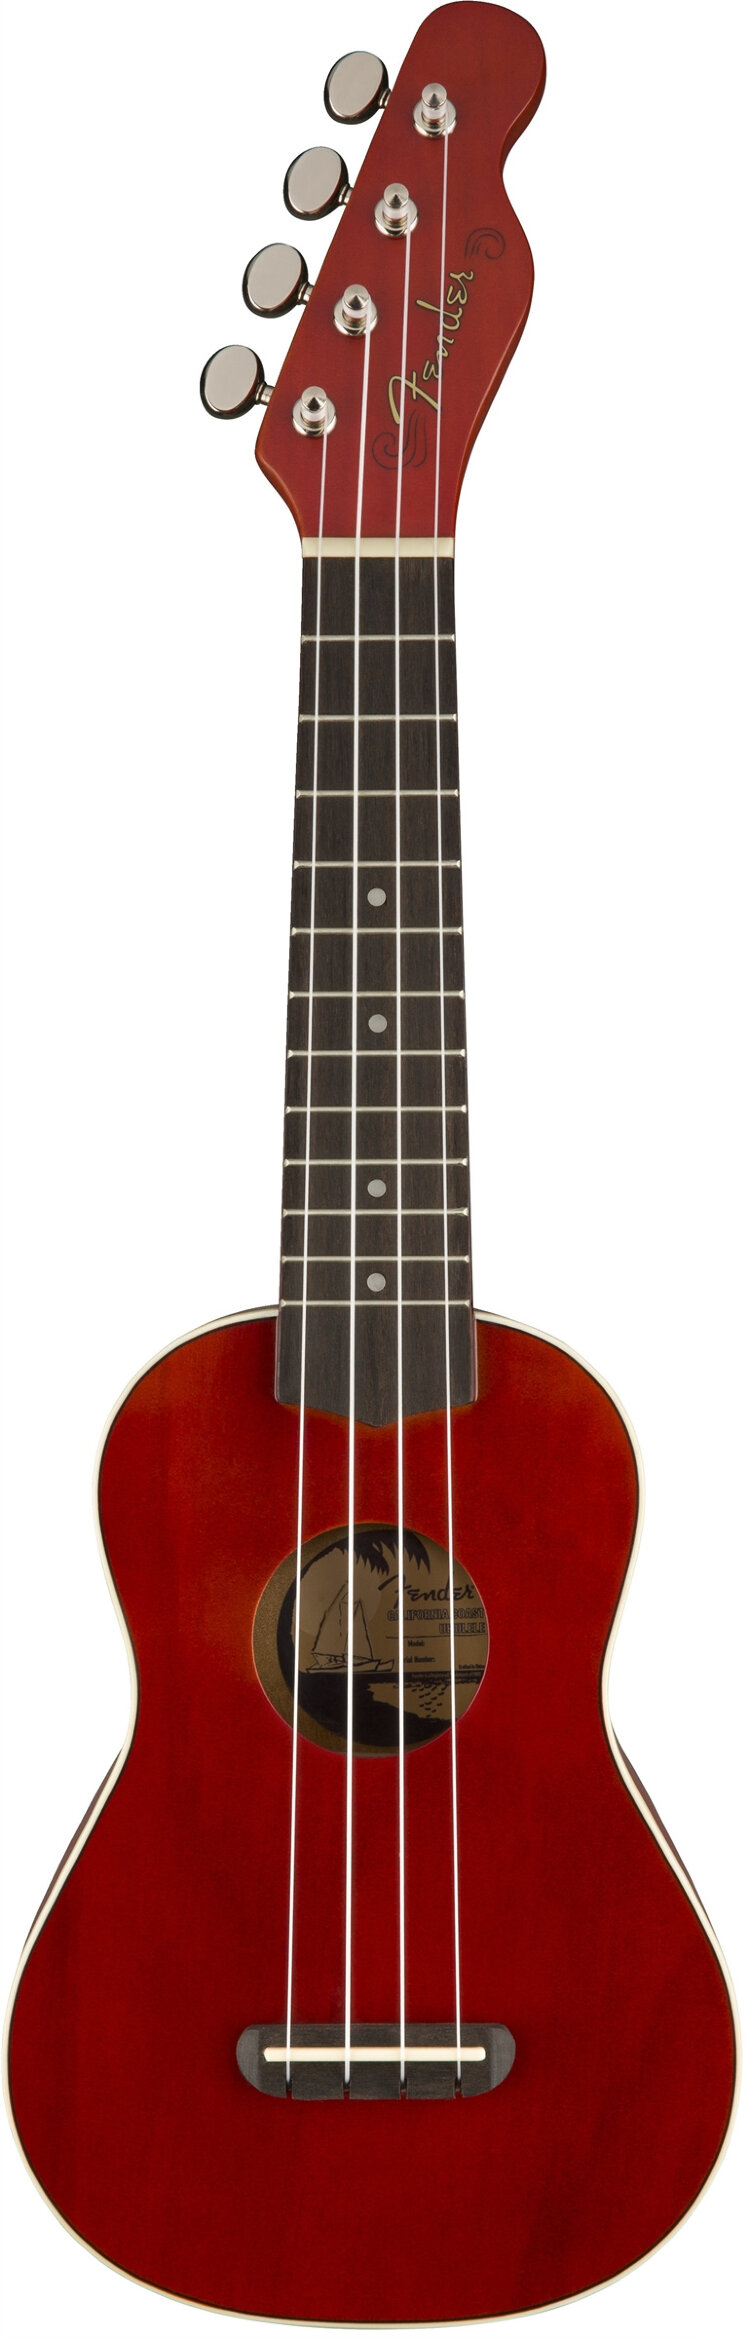 фото Укулеле сопрано fender ukulele venice cherry, цвет вишневый